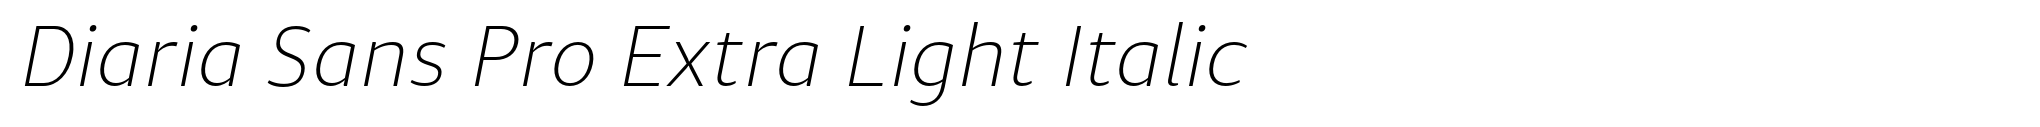 Diaria Sans Pro Extra Light Italic image